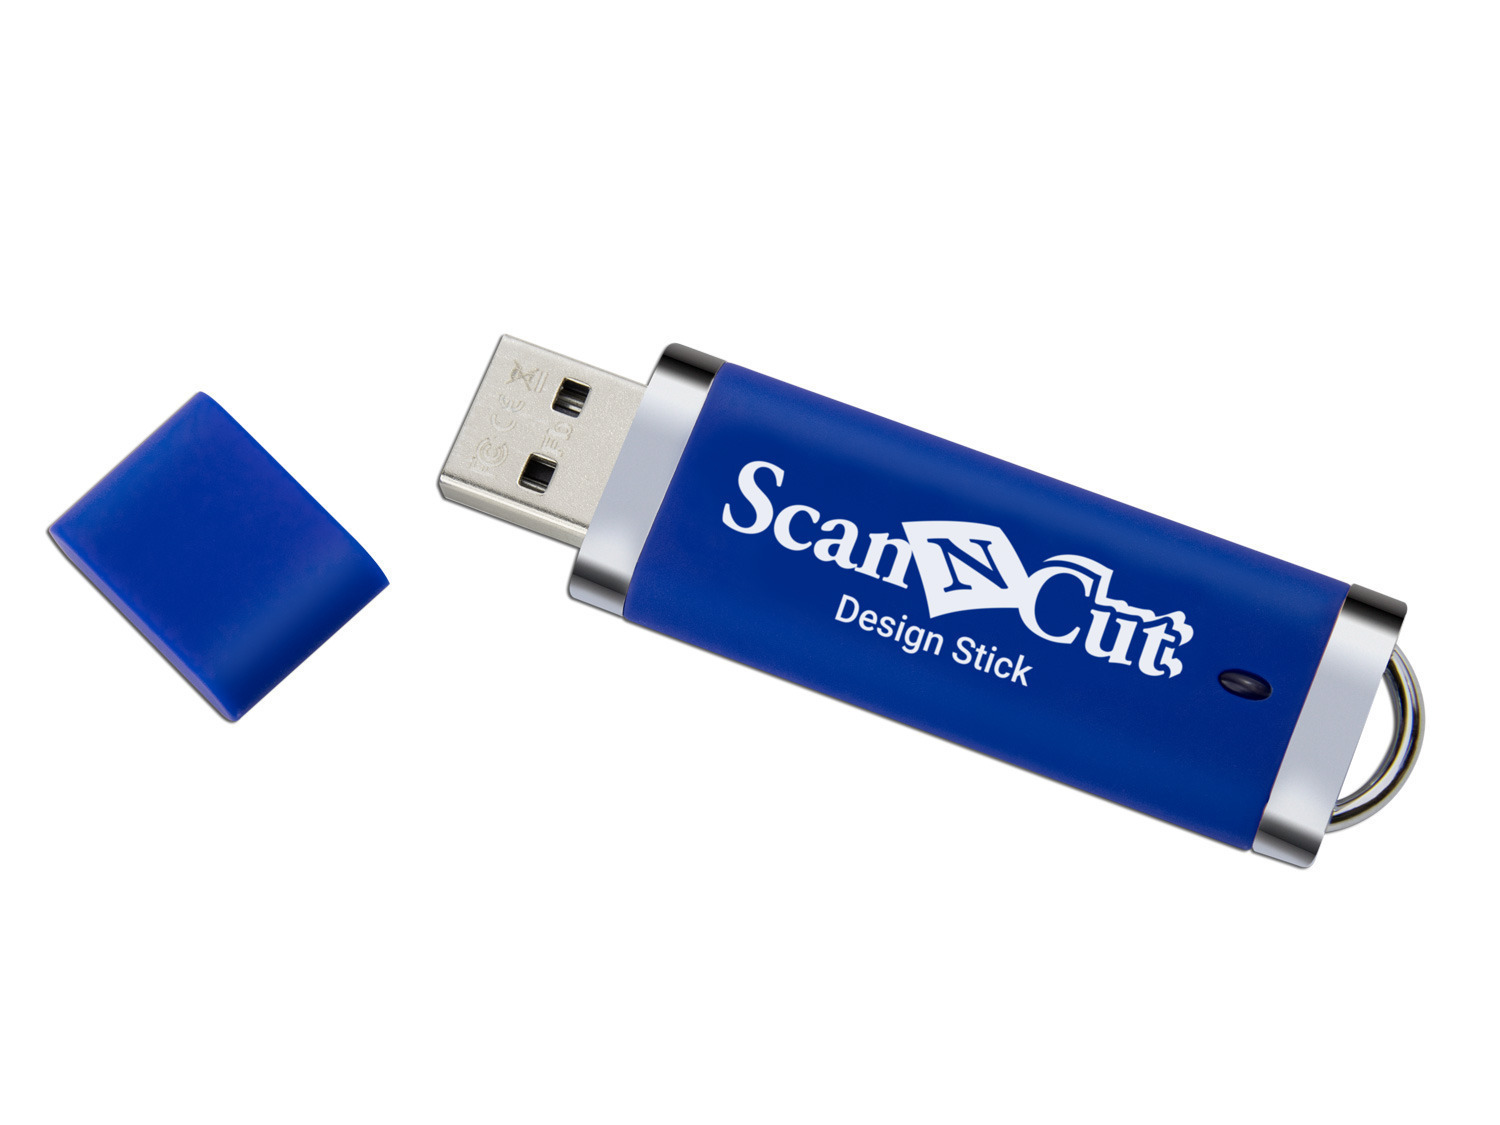 brother … »CM750« ScanNCut inkl. Stick USB Hobbyplotter